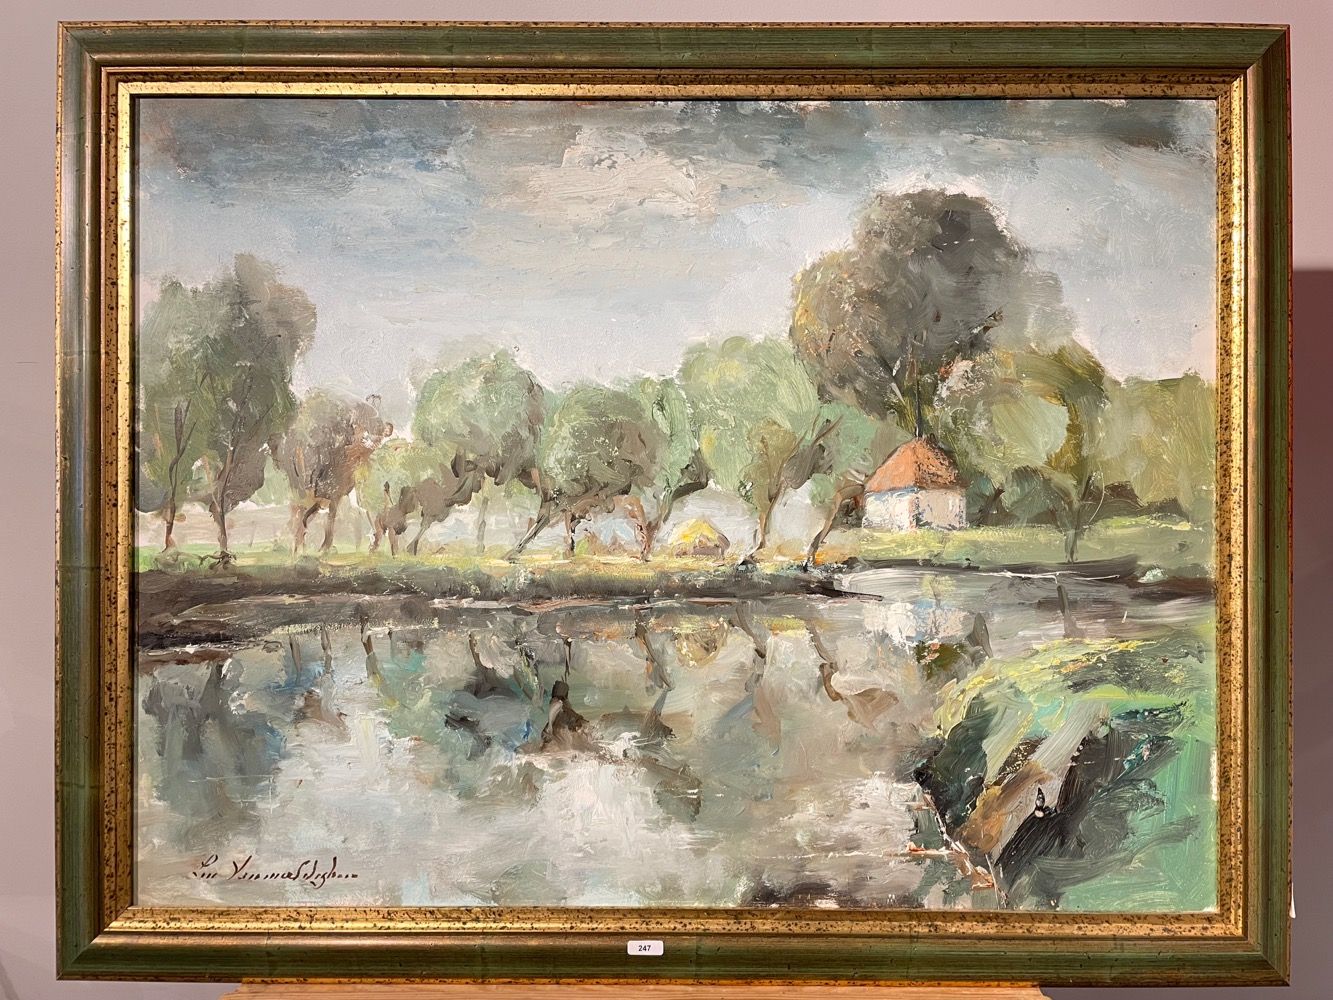 VAN MALDEGHEM Luc (1935-) "Lys风景"，20世纪，油画板，左下方签名，60x80厘米。